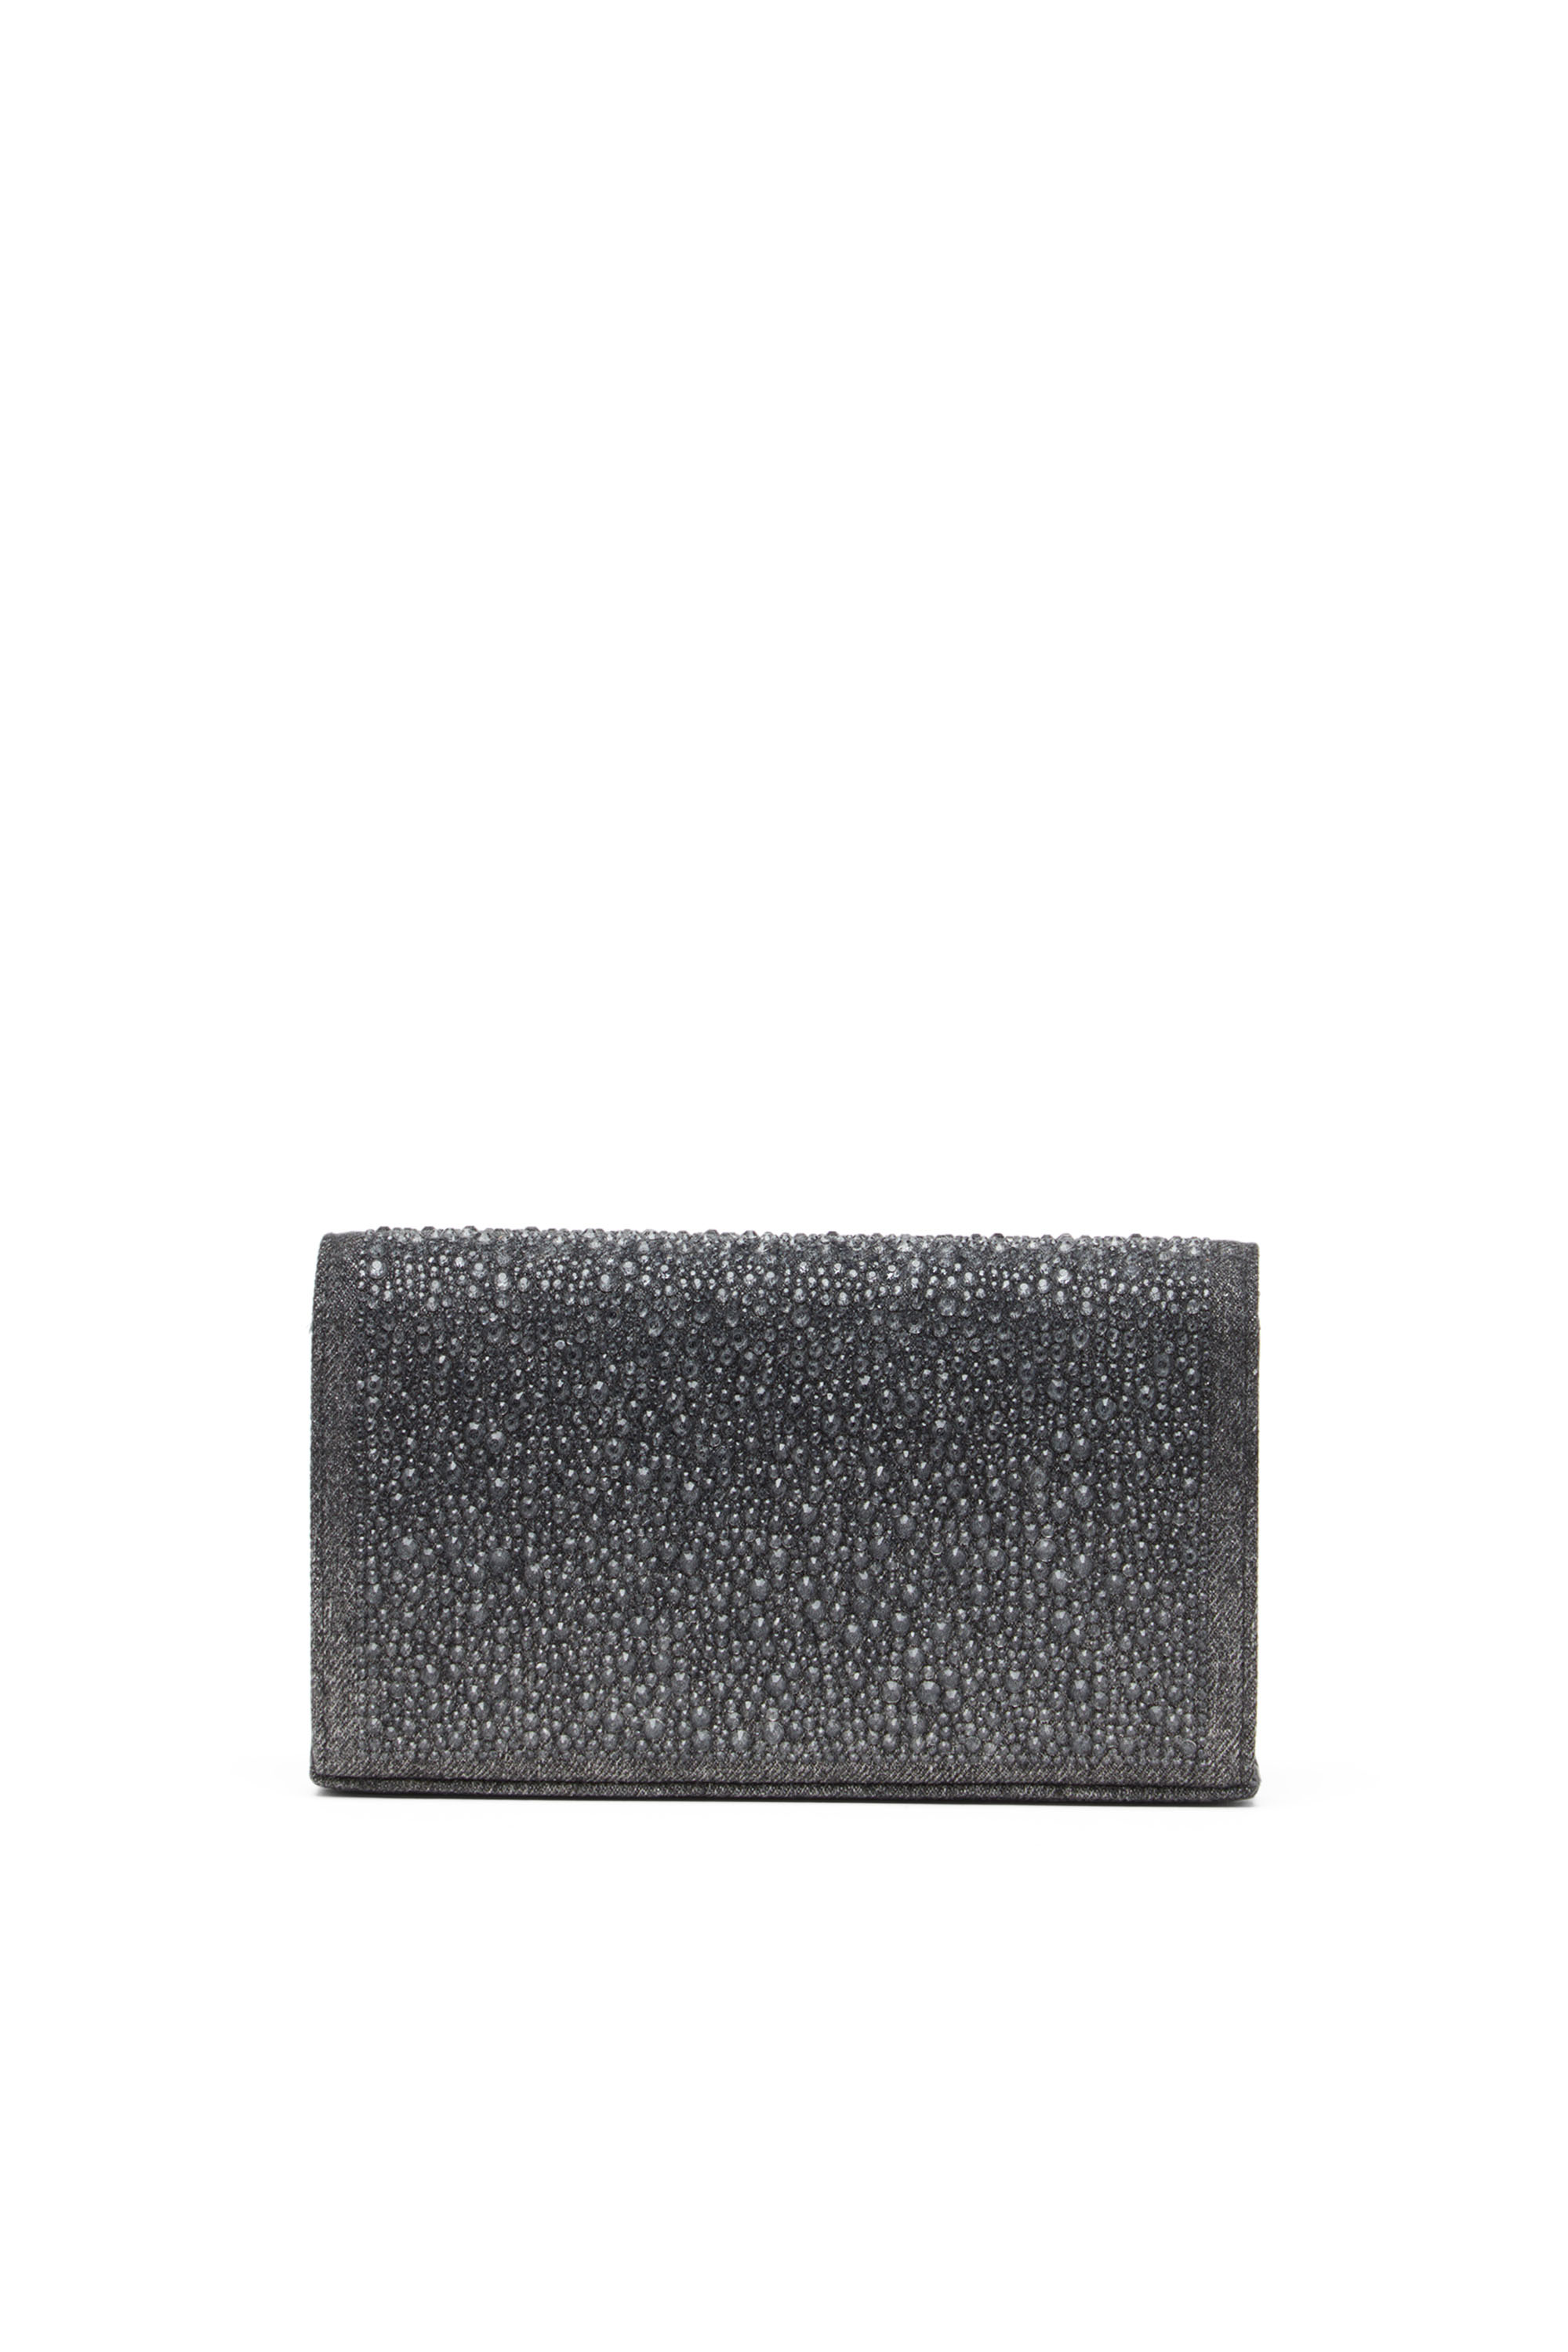 Diesel - 1DR WALLET STRAP, Female Wallet purse in crystal denim in Black - Image 2